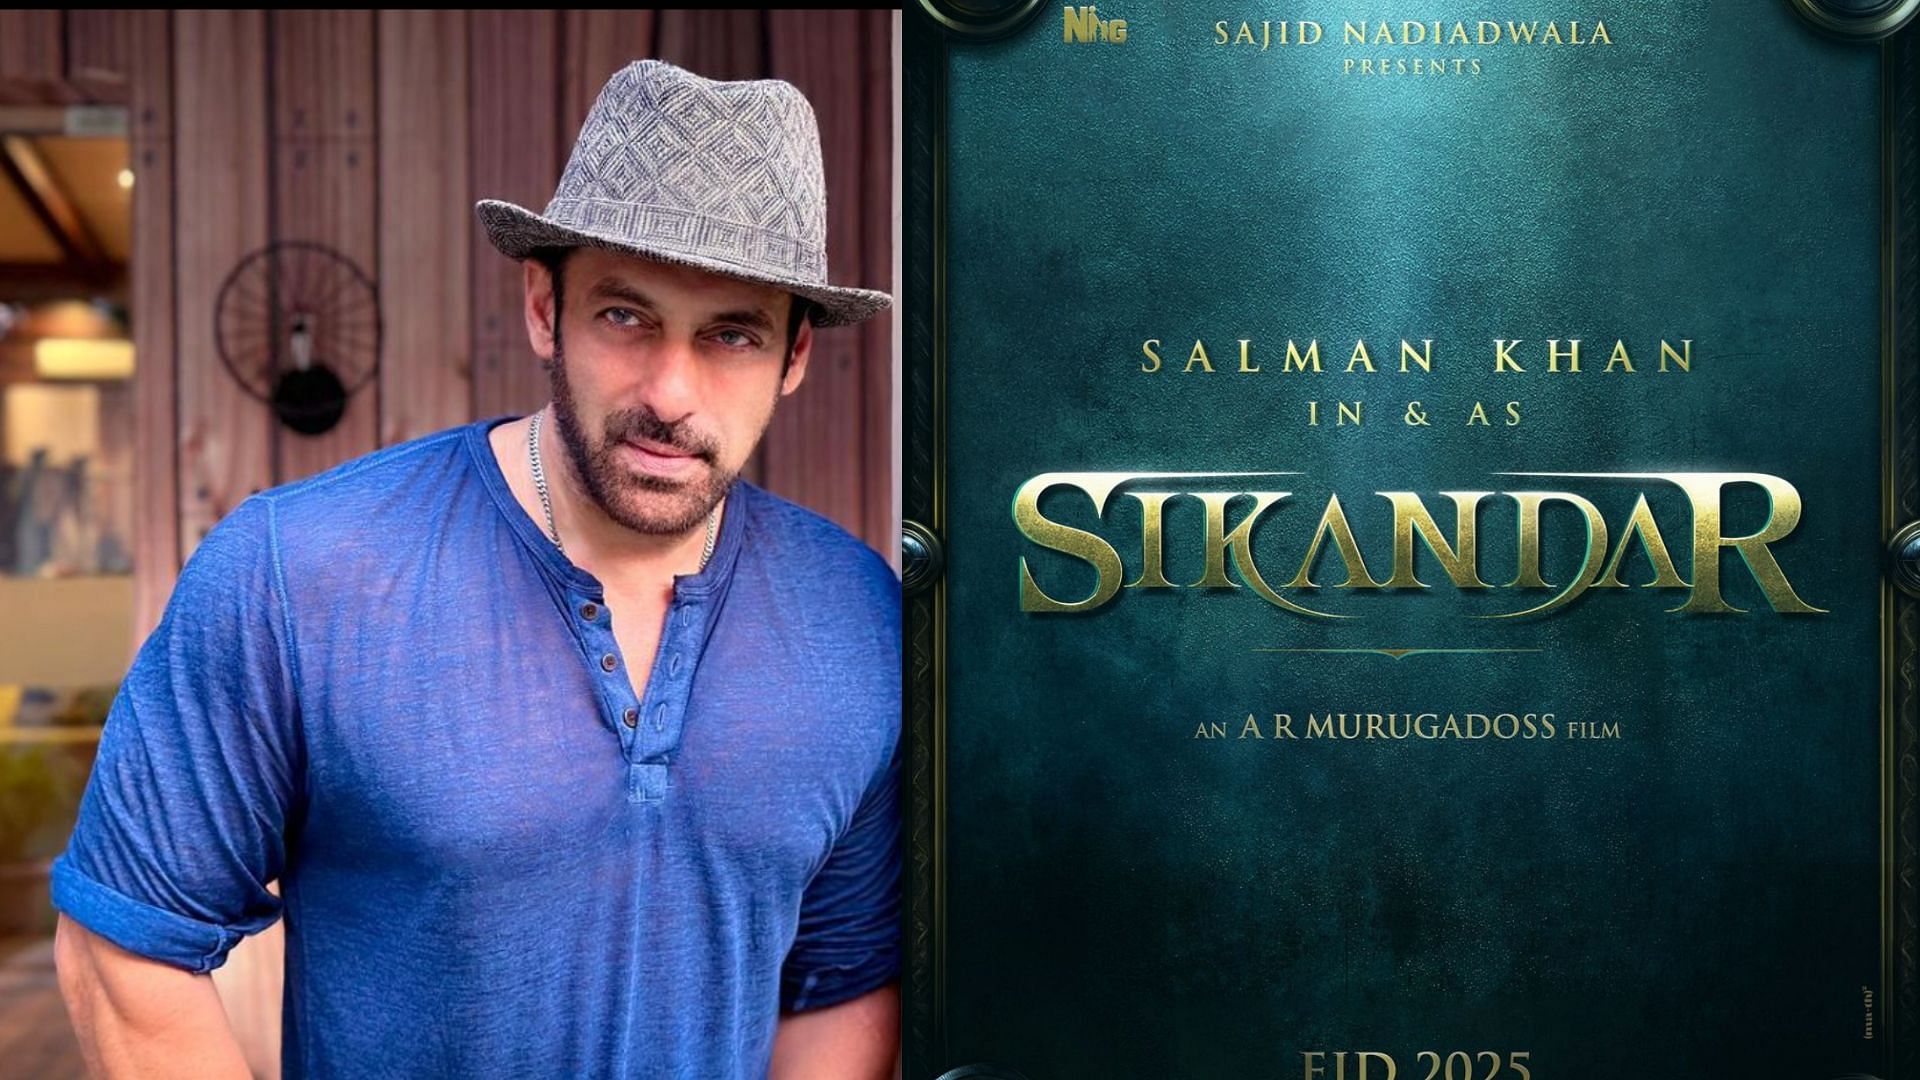 <div class="paragraphs"><p>Salman Khan's upcoming movie is titled <em>Sikandar</em>.</p></div>